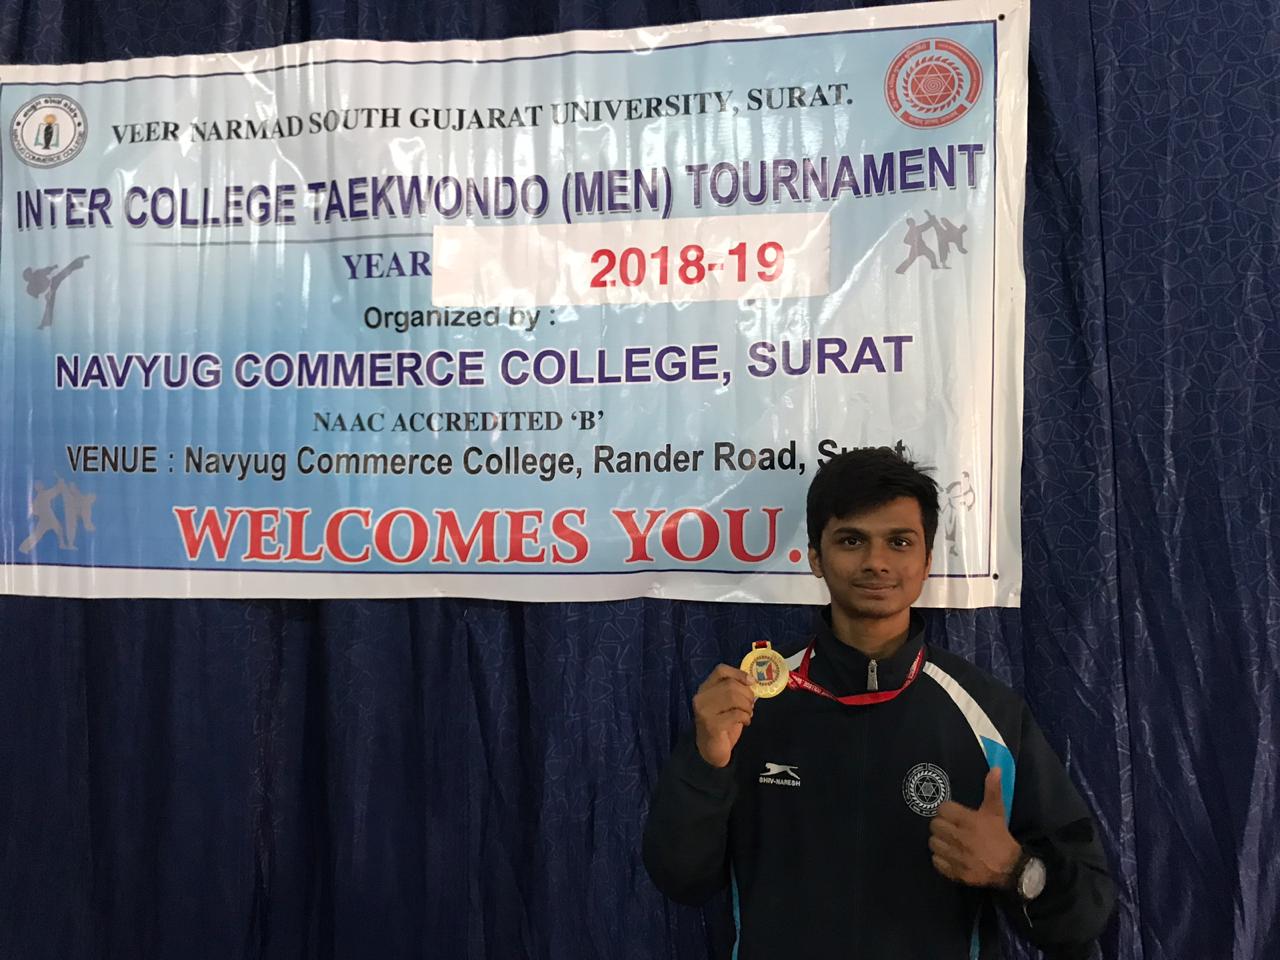 Inter college "Taekwondo" championship 2018-19 at Navyug commerce College